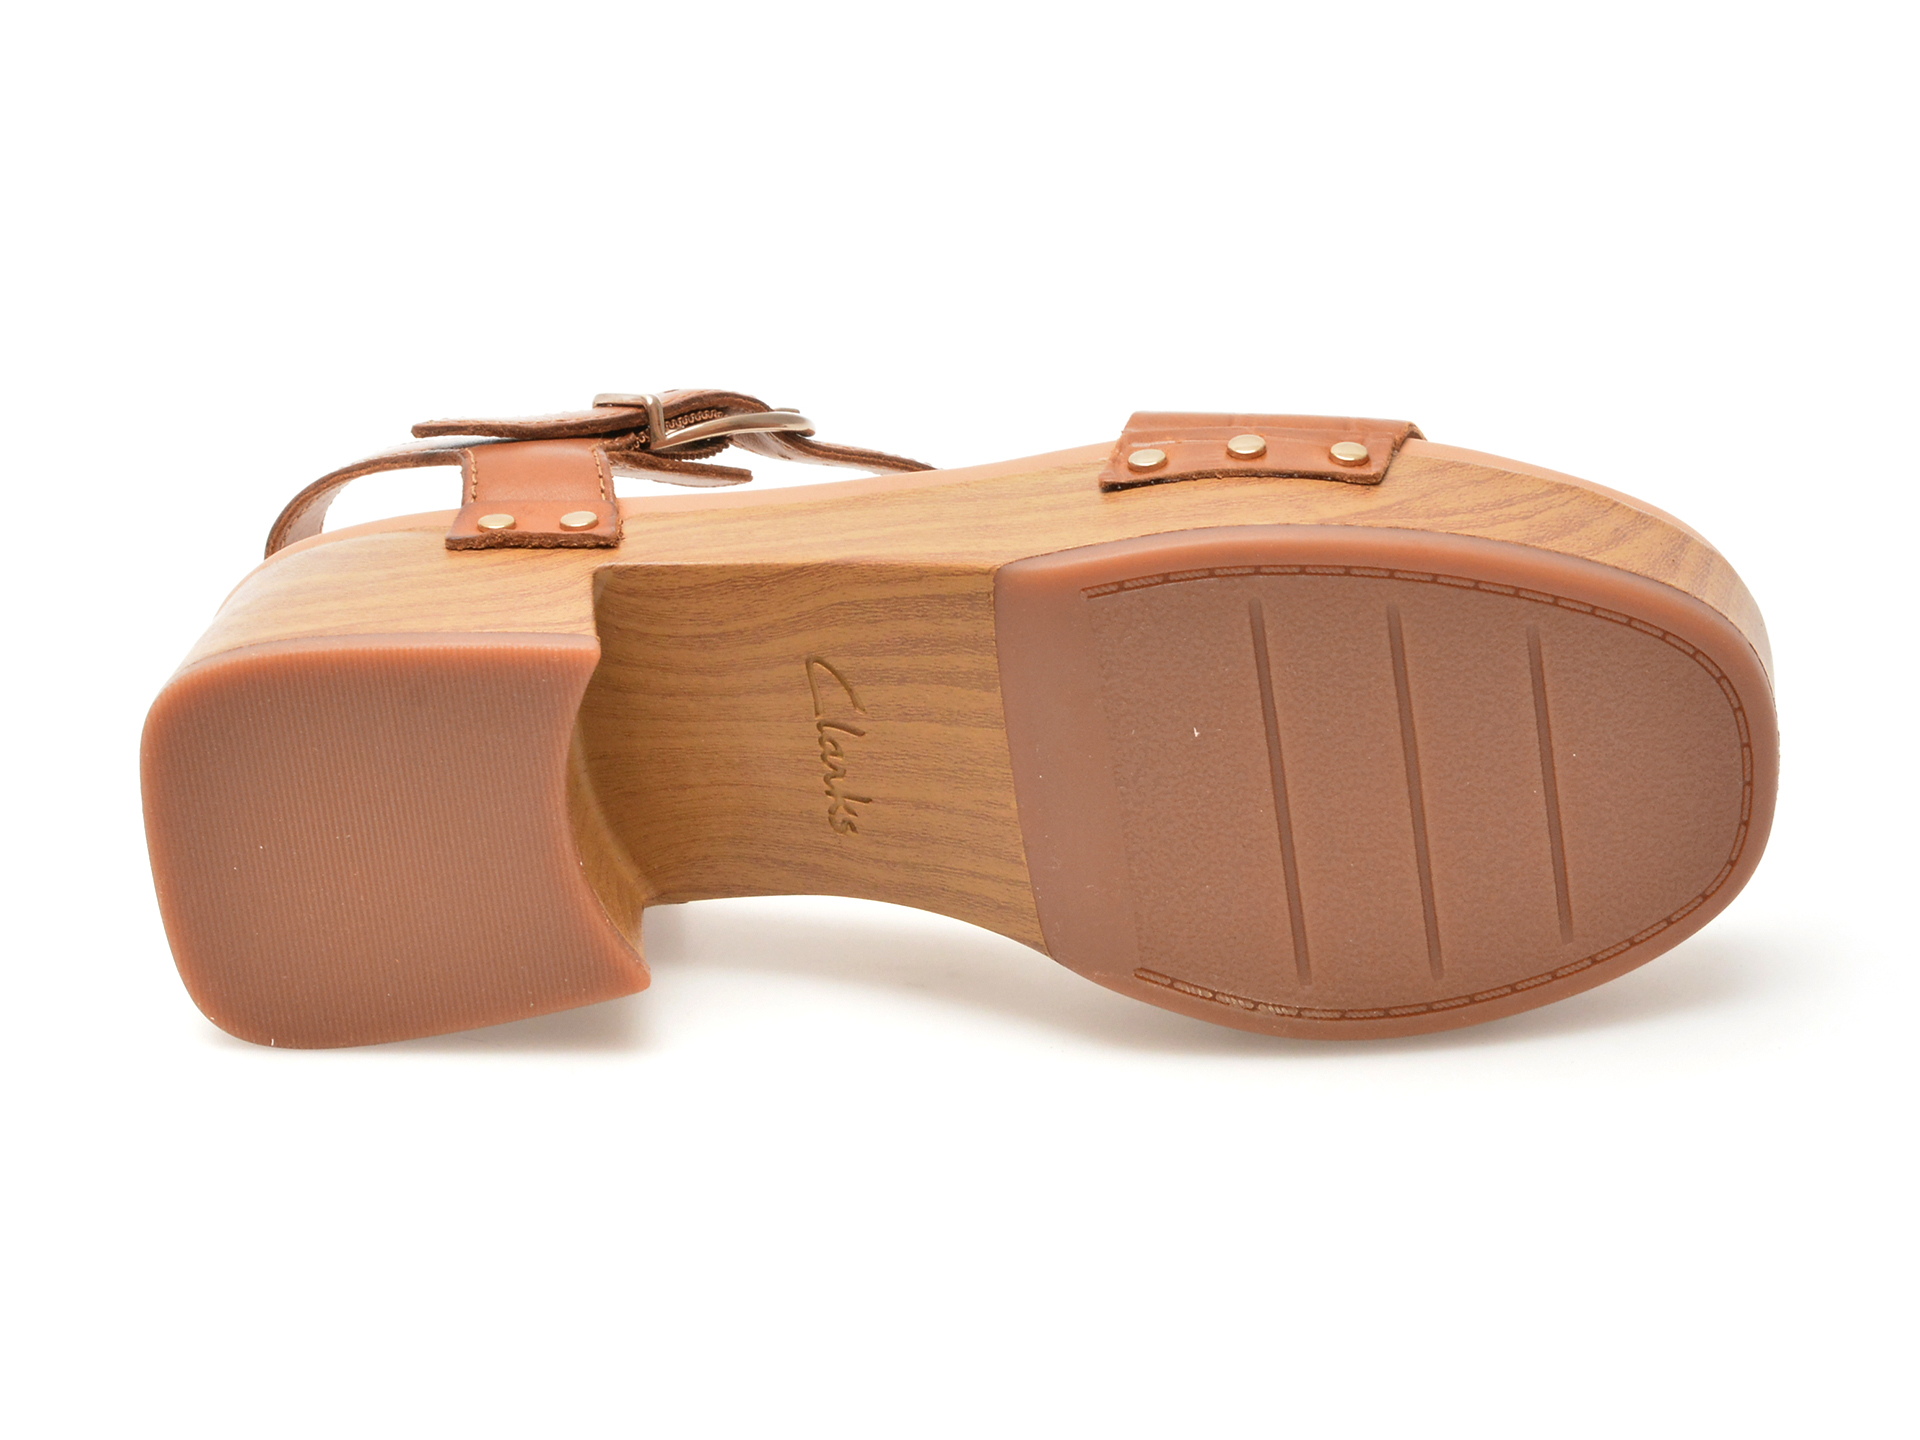 Sandale casual CLARKS maro, SIVANNE BAY, din piele naturala